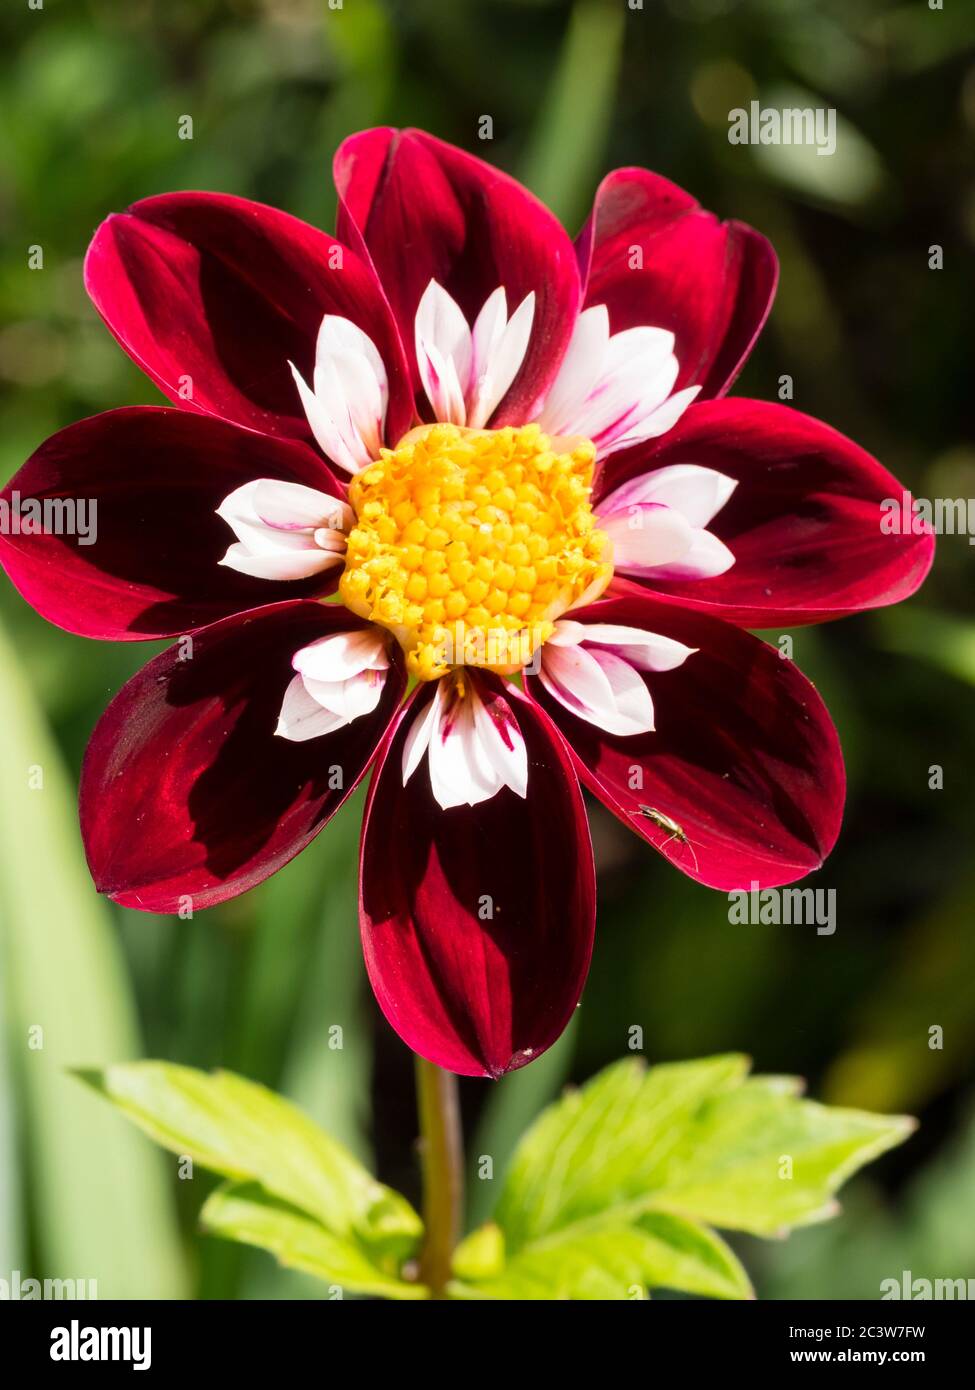 Red and white summer flower of the half hardy collarette Dahlia 'Chimborazo' Stock Photo